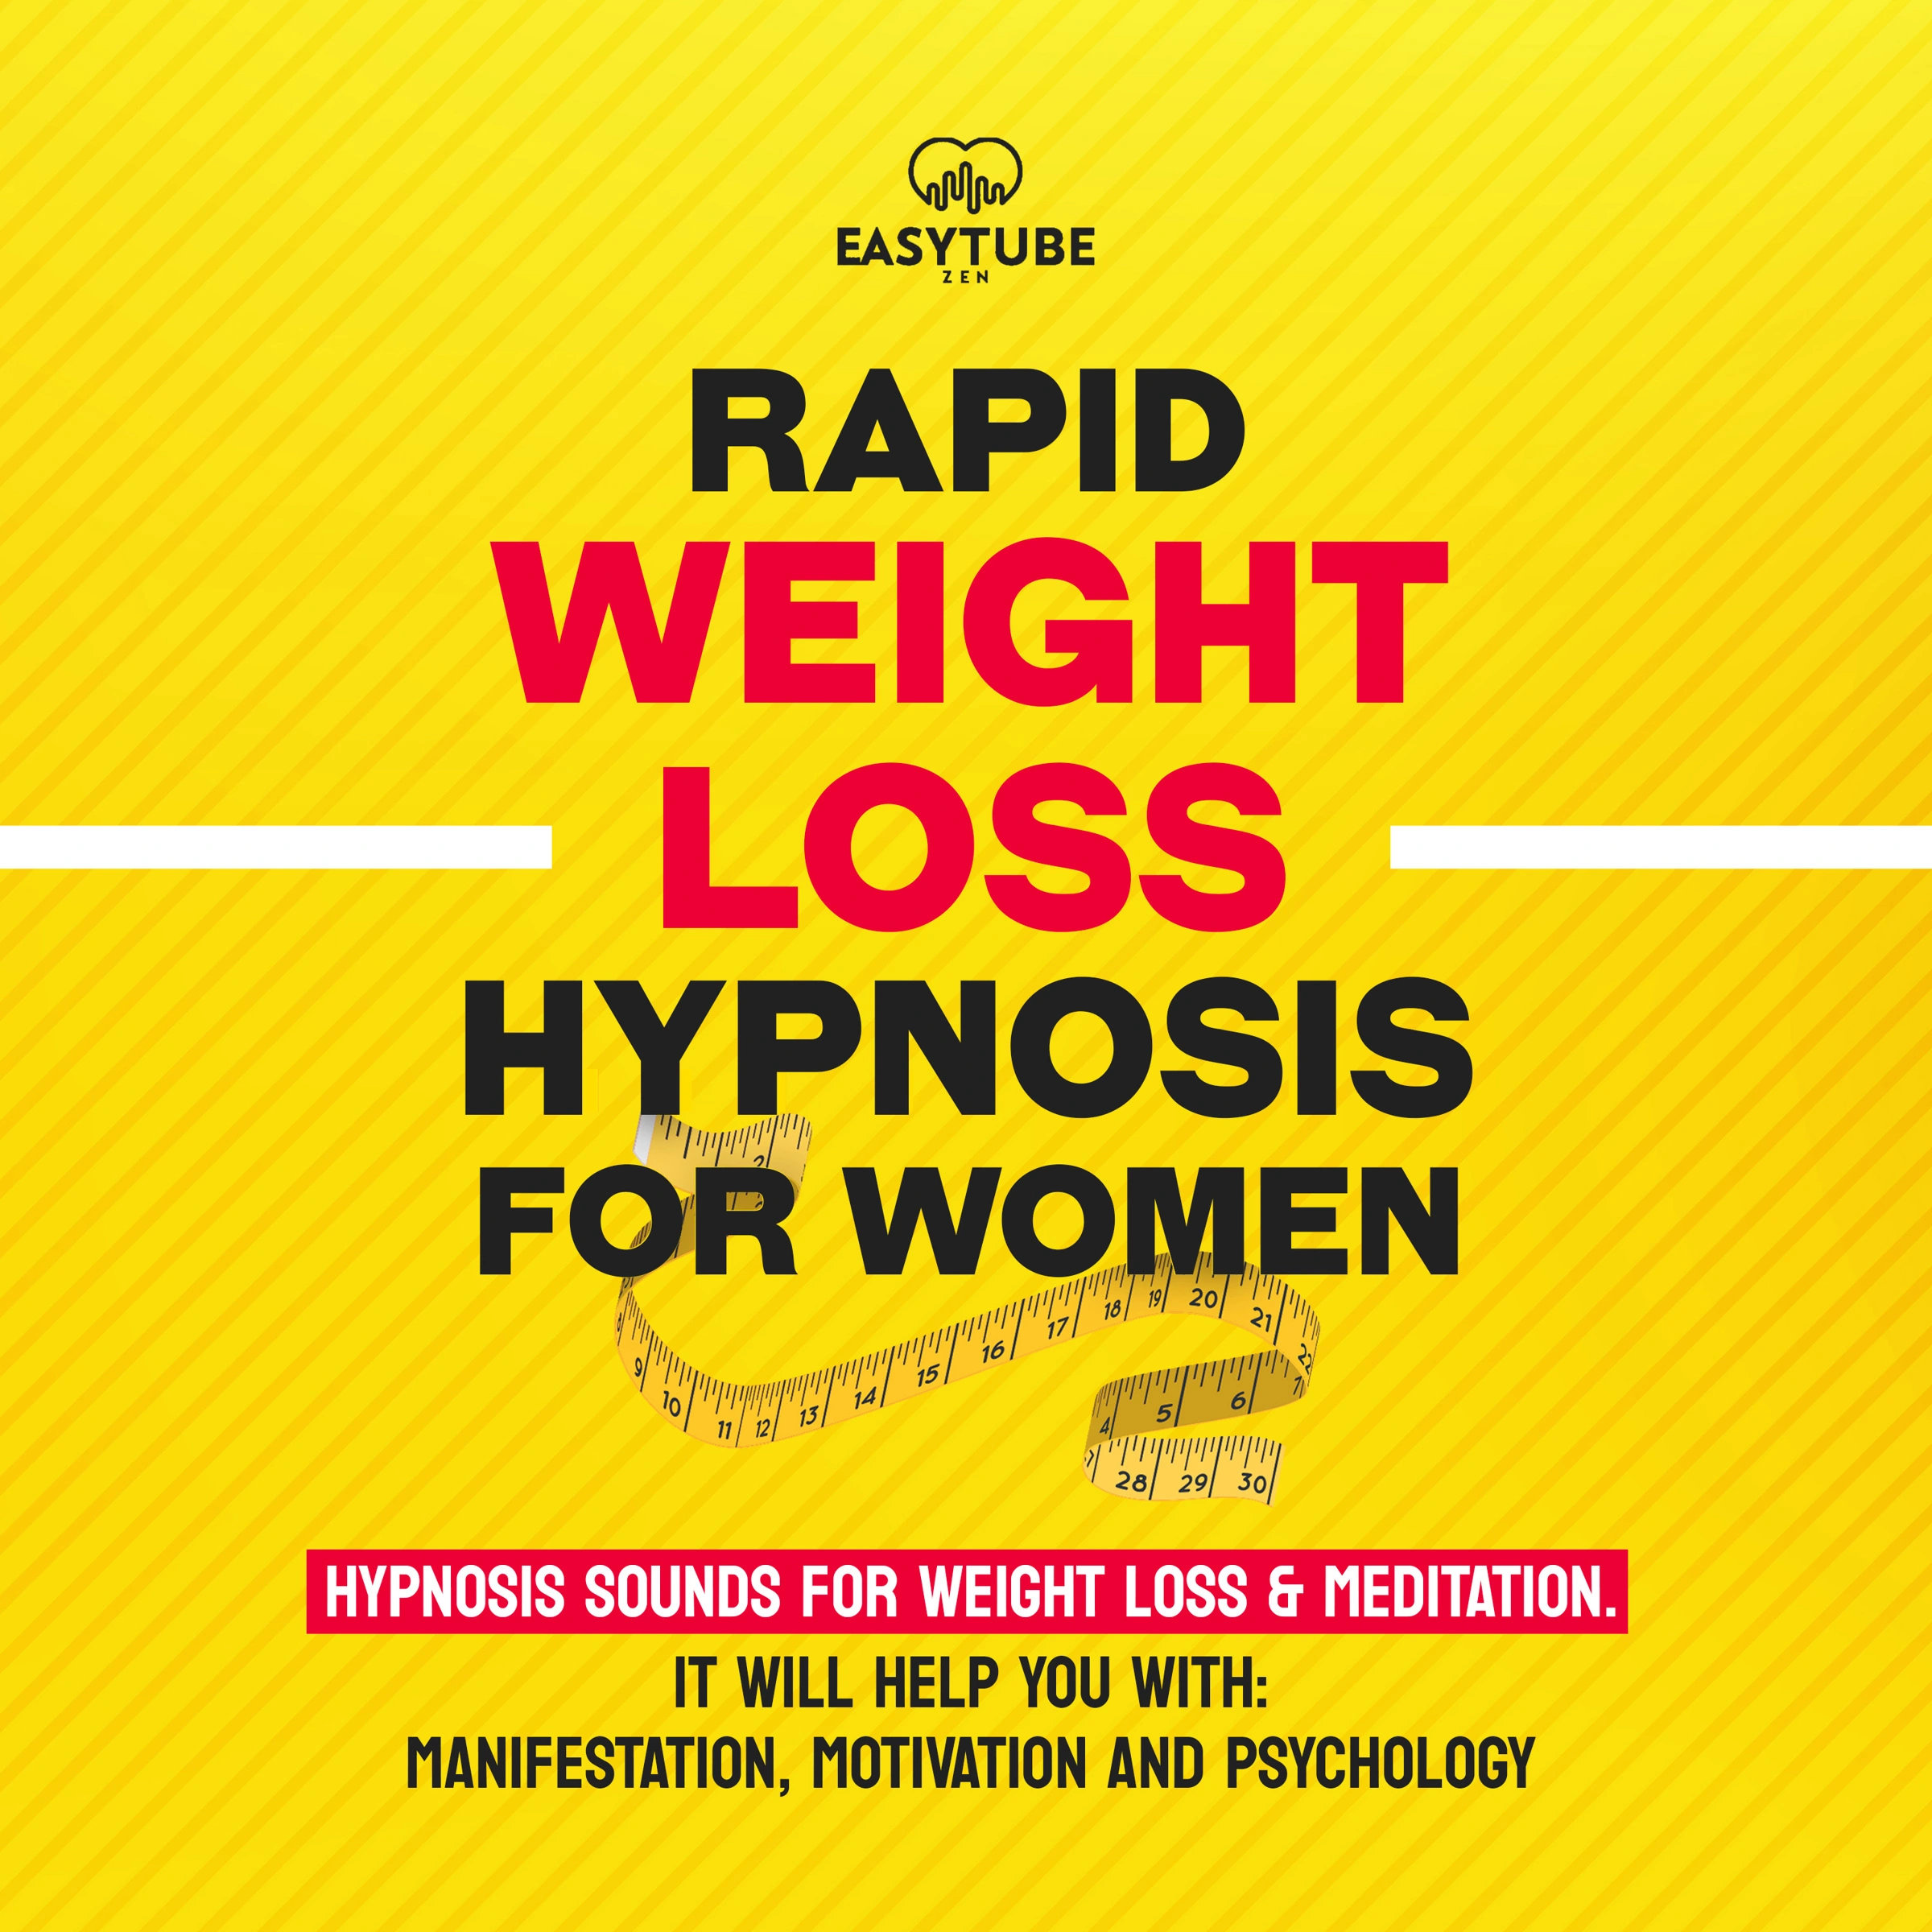 Rapid Weight Loss Hypnosis for Women Audiobook by EasyTube Zen Studio